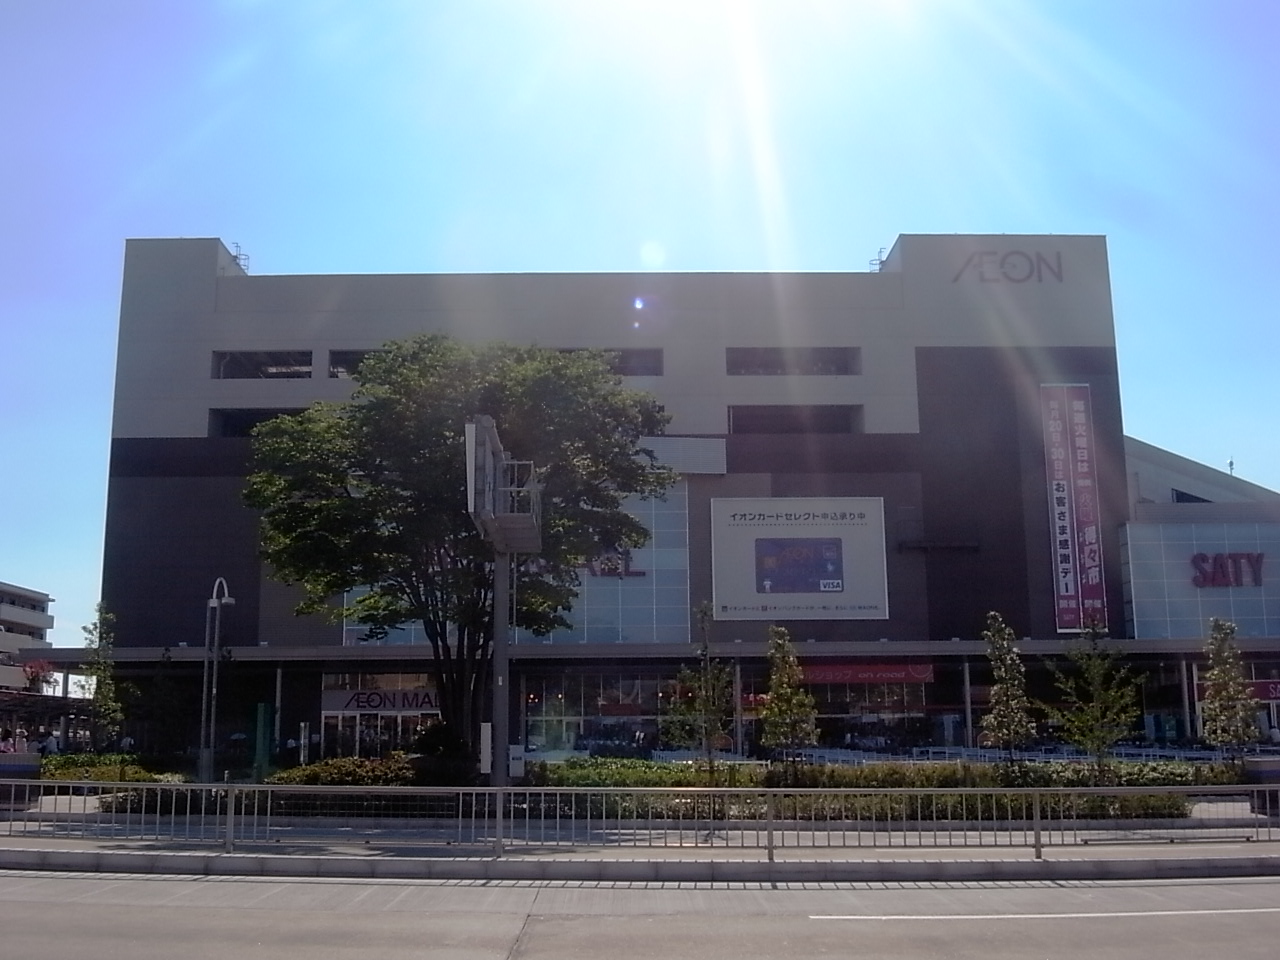 Shopping centre. 1500m to Aeon Mall Aratamabashi (shopping center)